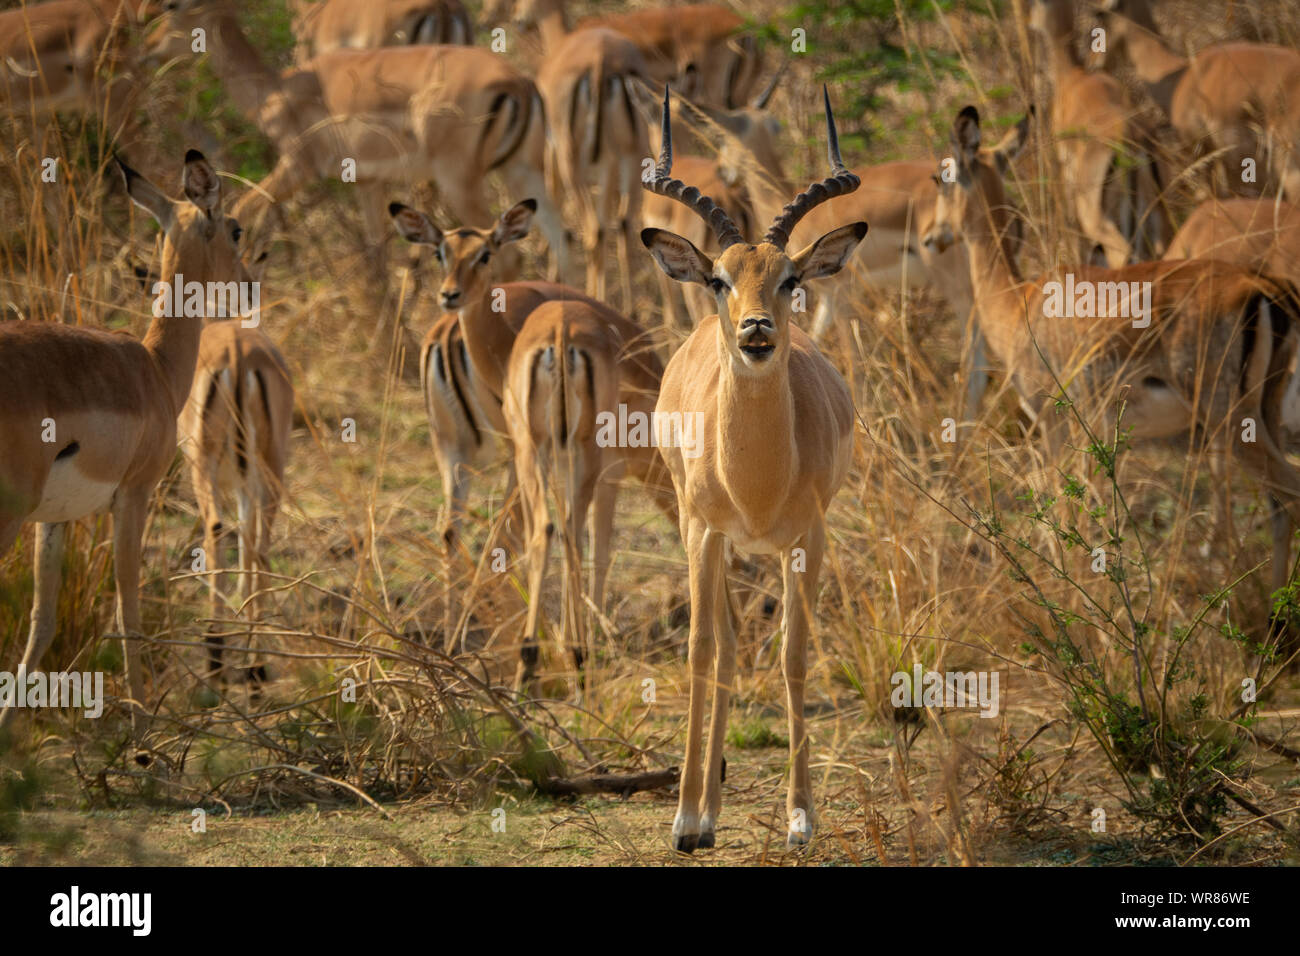 Male impala defending group of females, African wildlife Stock Photo